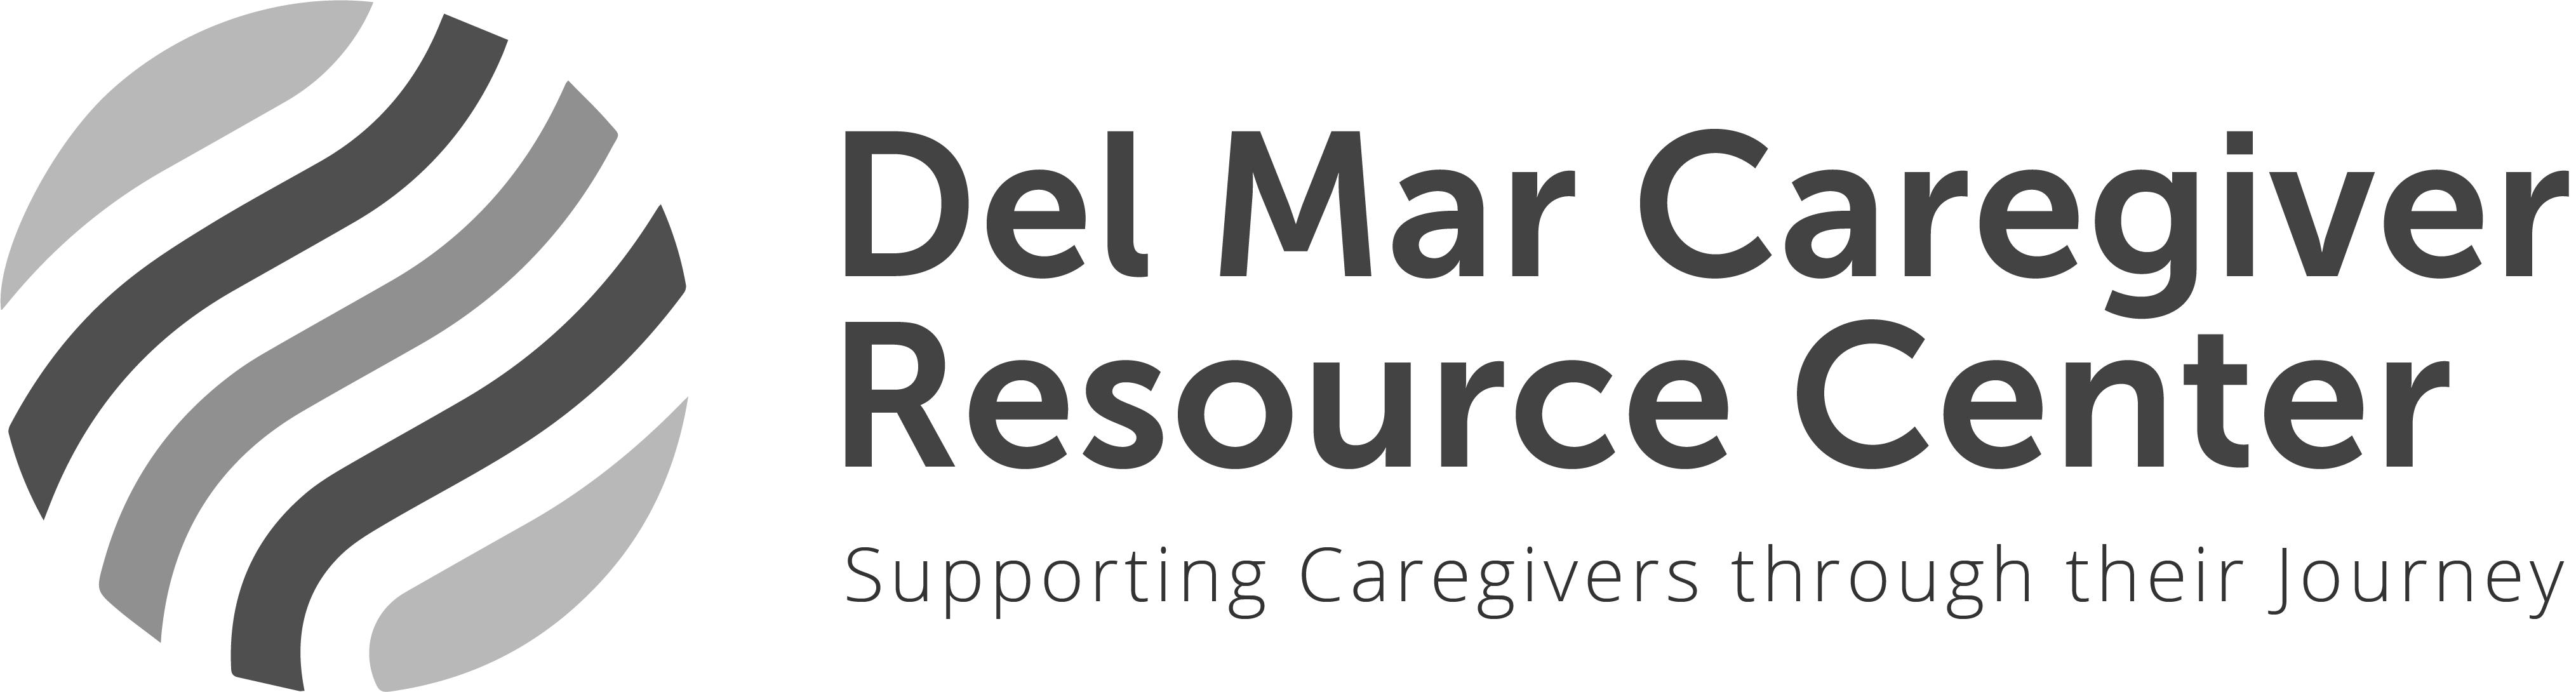 Del Mar Caregiver Resource Center, providing caregiver resources to Santa Cruz and nearby counties